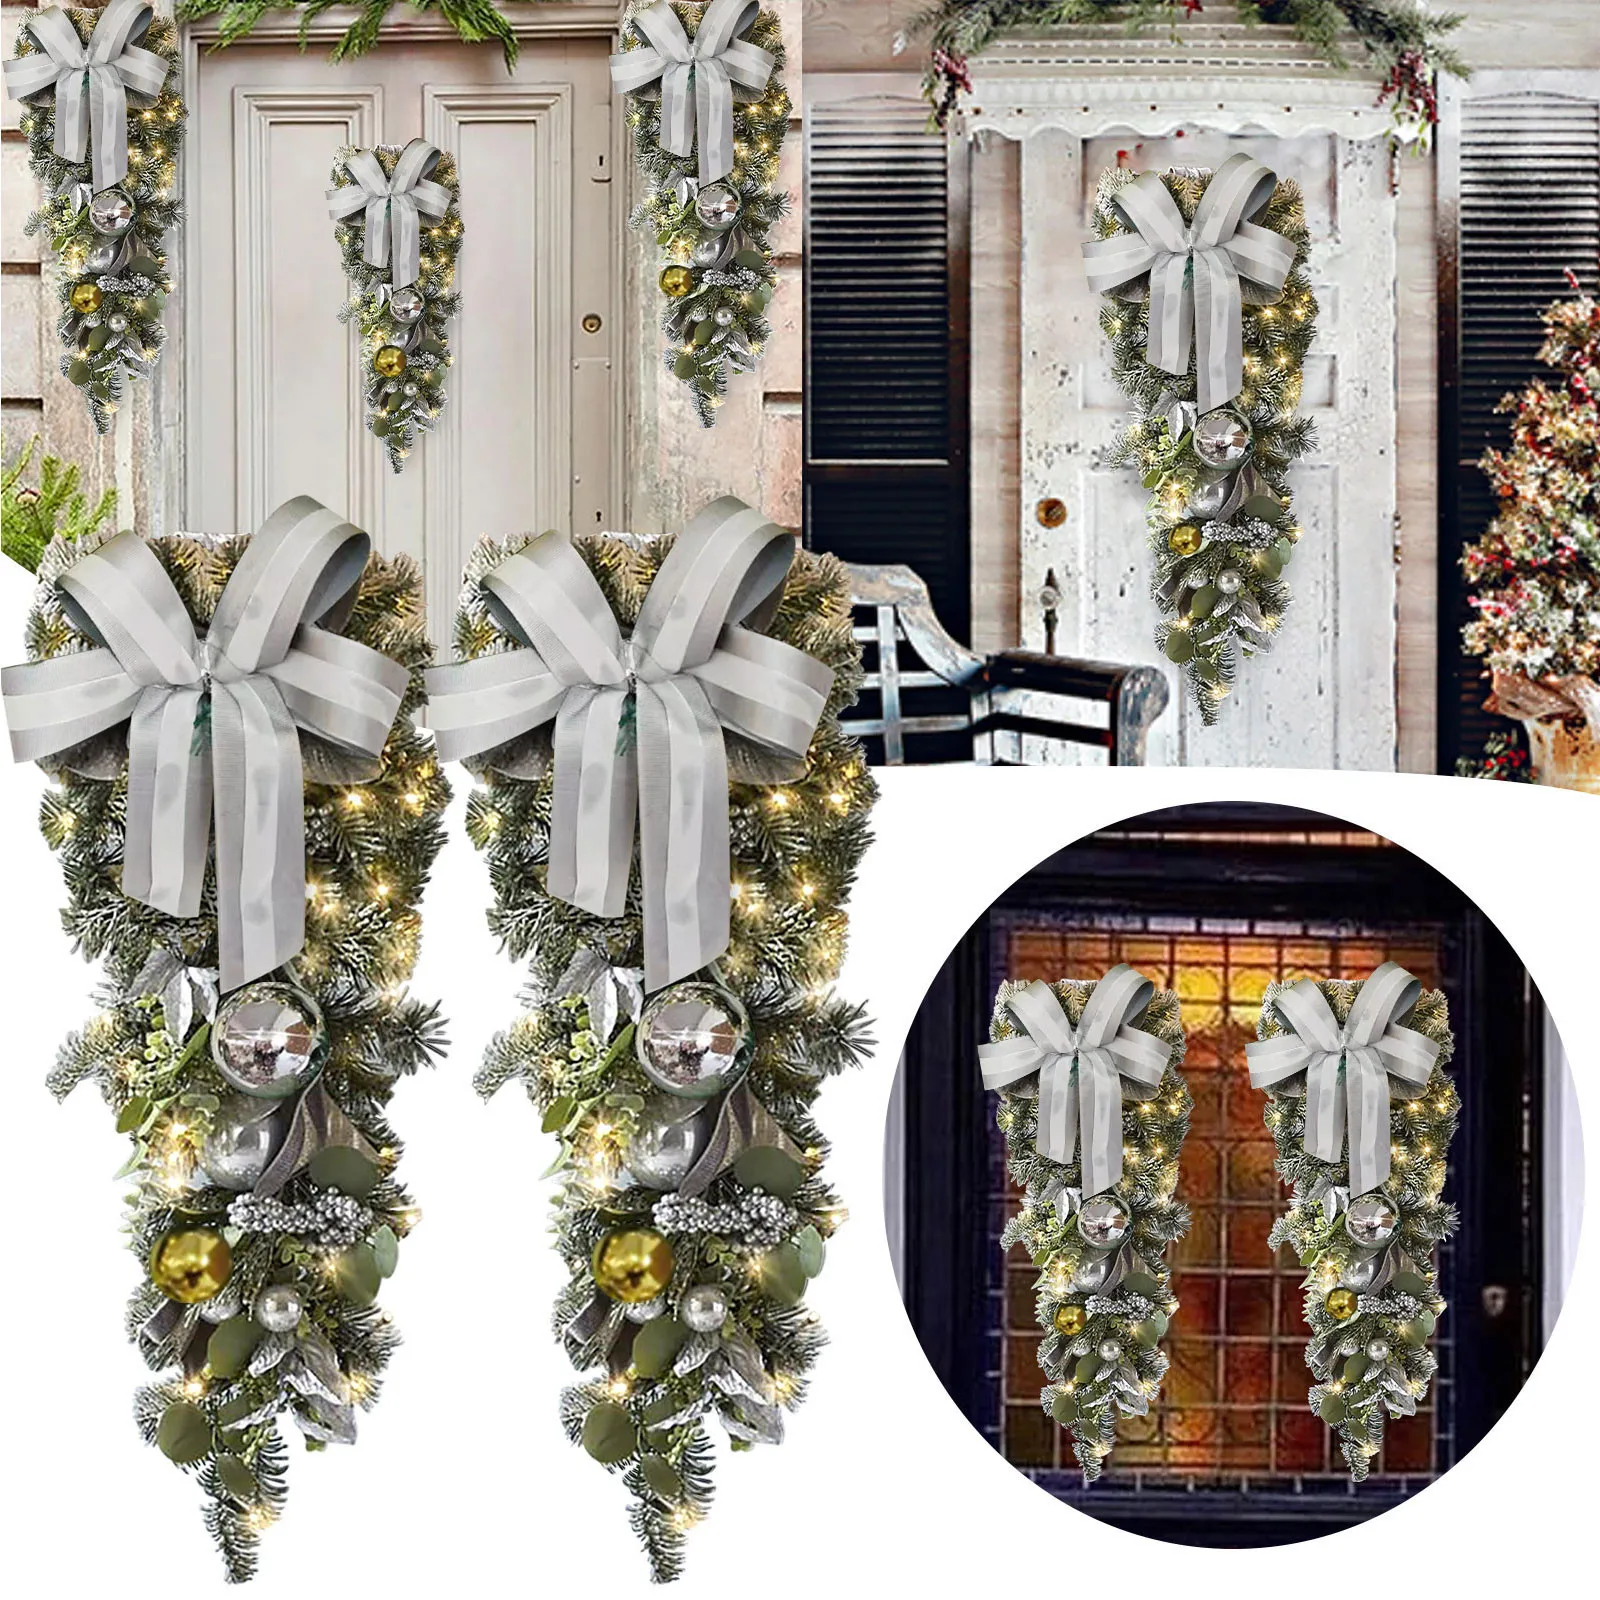 

Christmas Christmas Pendant Christmas Ring Door Dead Garland Decorations Branches Hanger Vine Cane Wreath 5 Ft Christmas Wreath